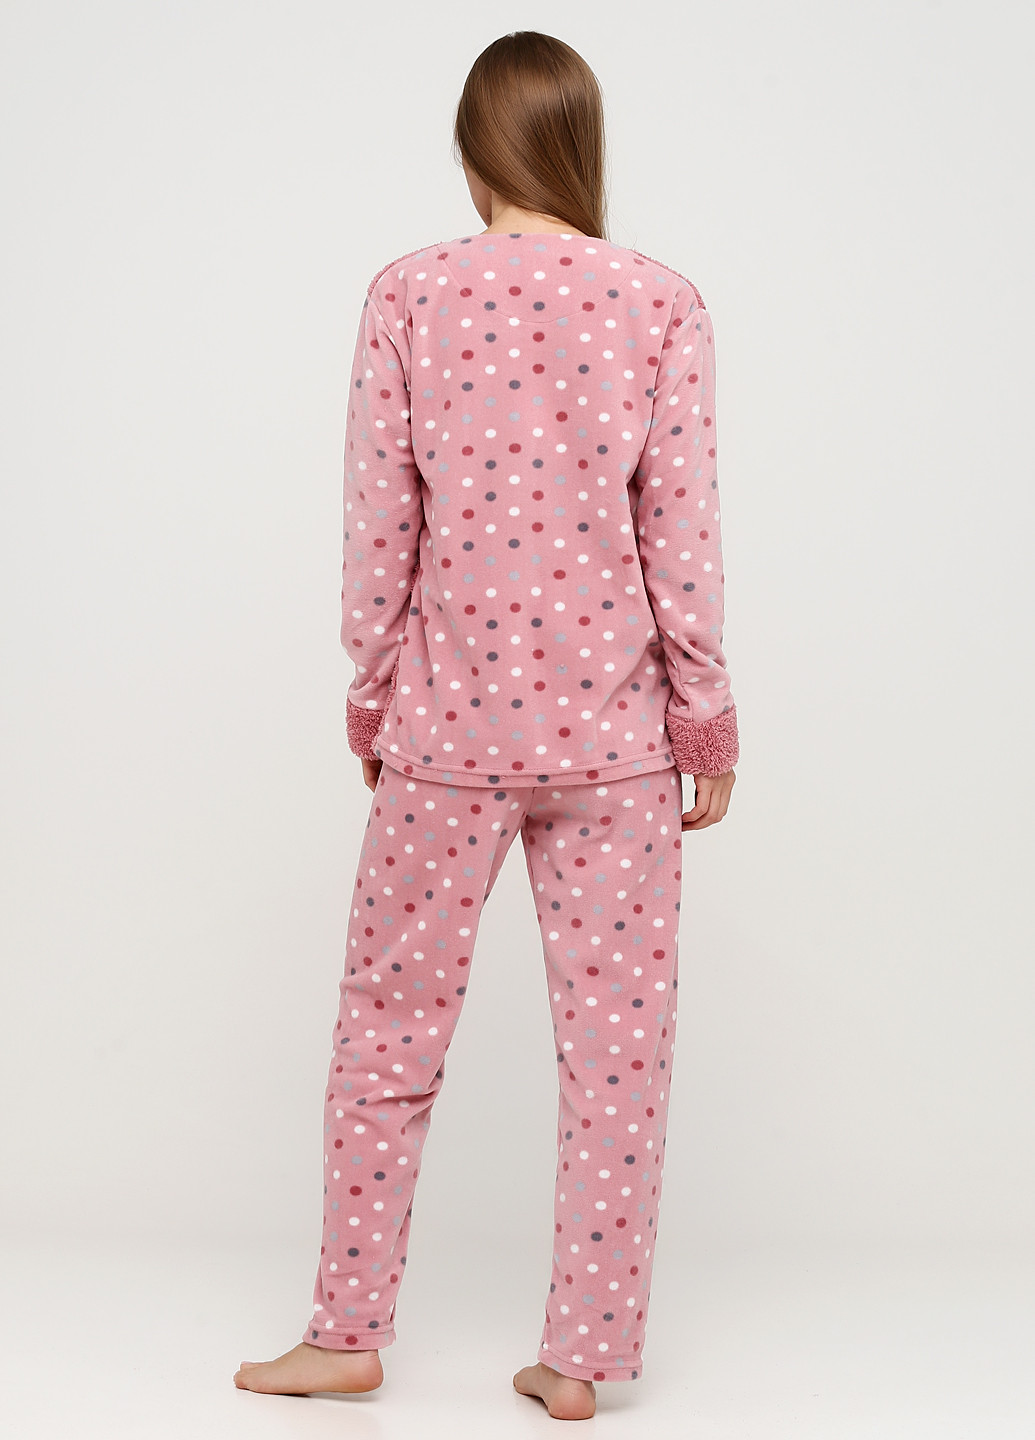 Розовая всесезон пижама (свитшот, брюки) свитшот + брюки Fenix